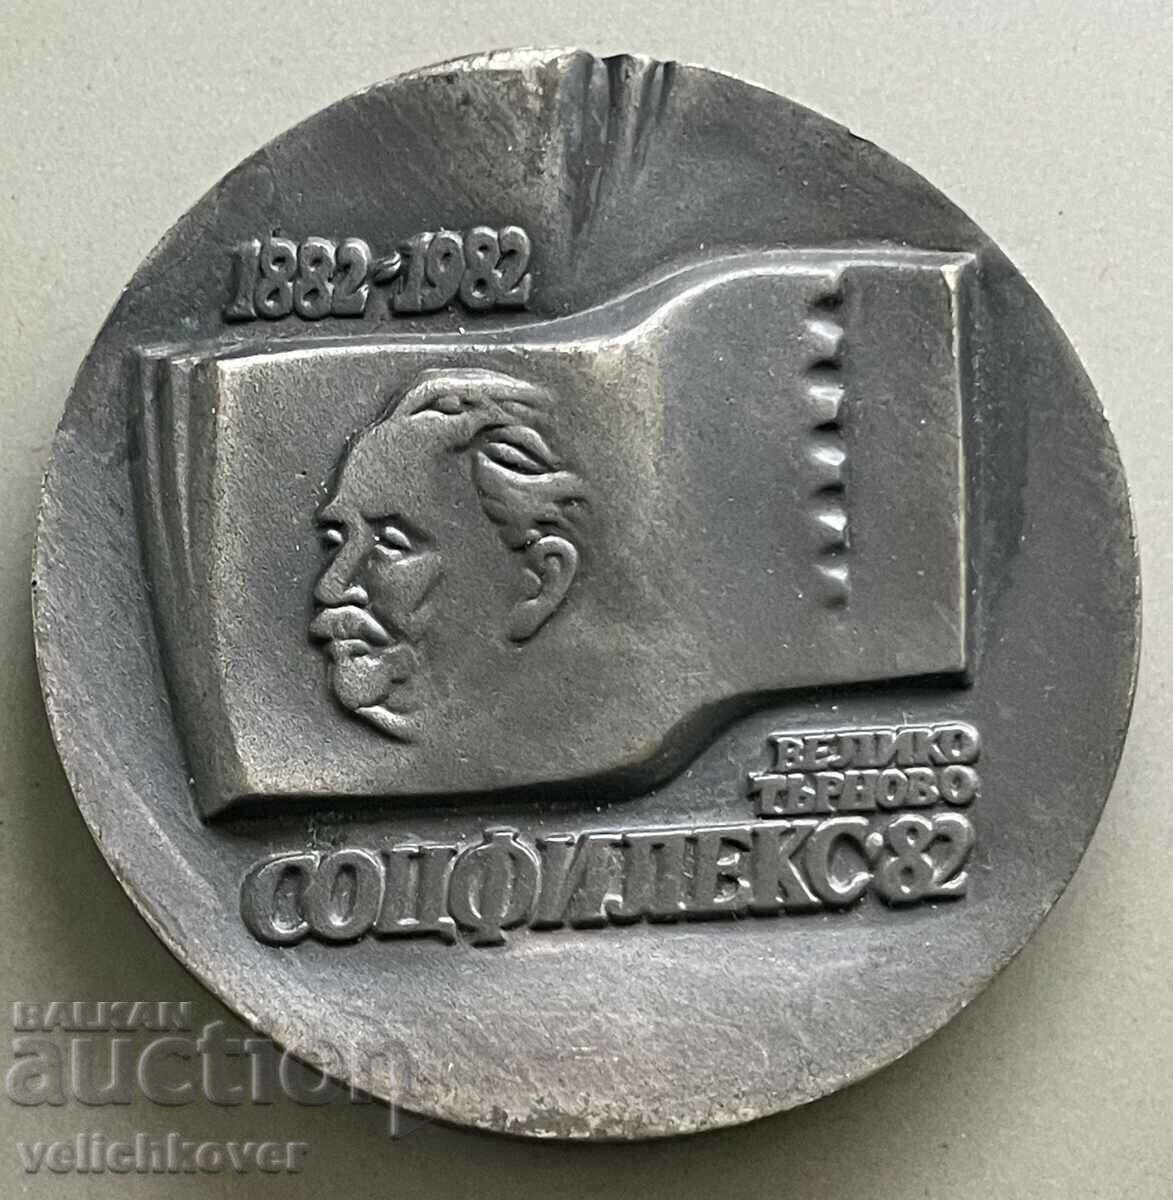 36343 Bulgaria philatelic plaque Sotsfilex 1982. Tarnovo